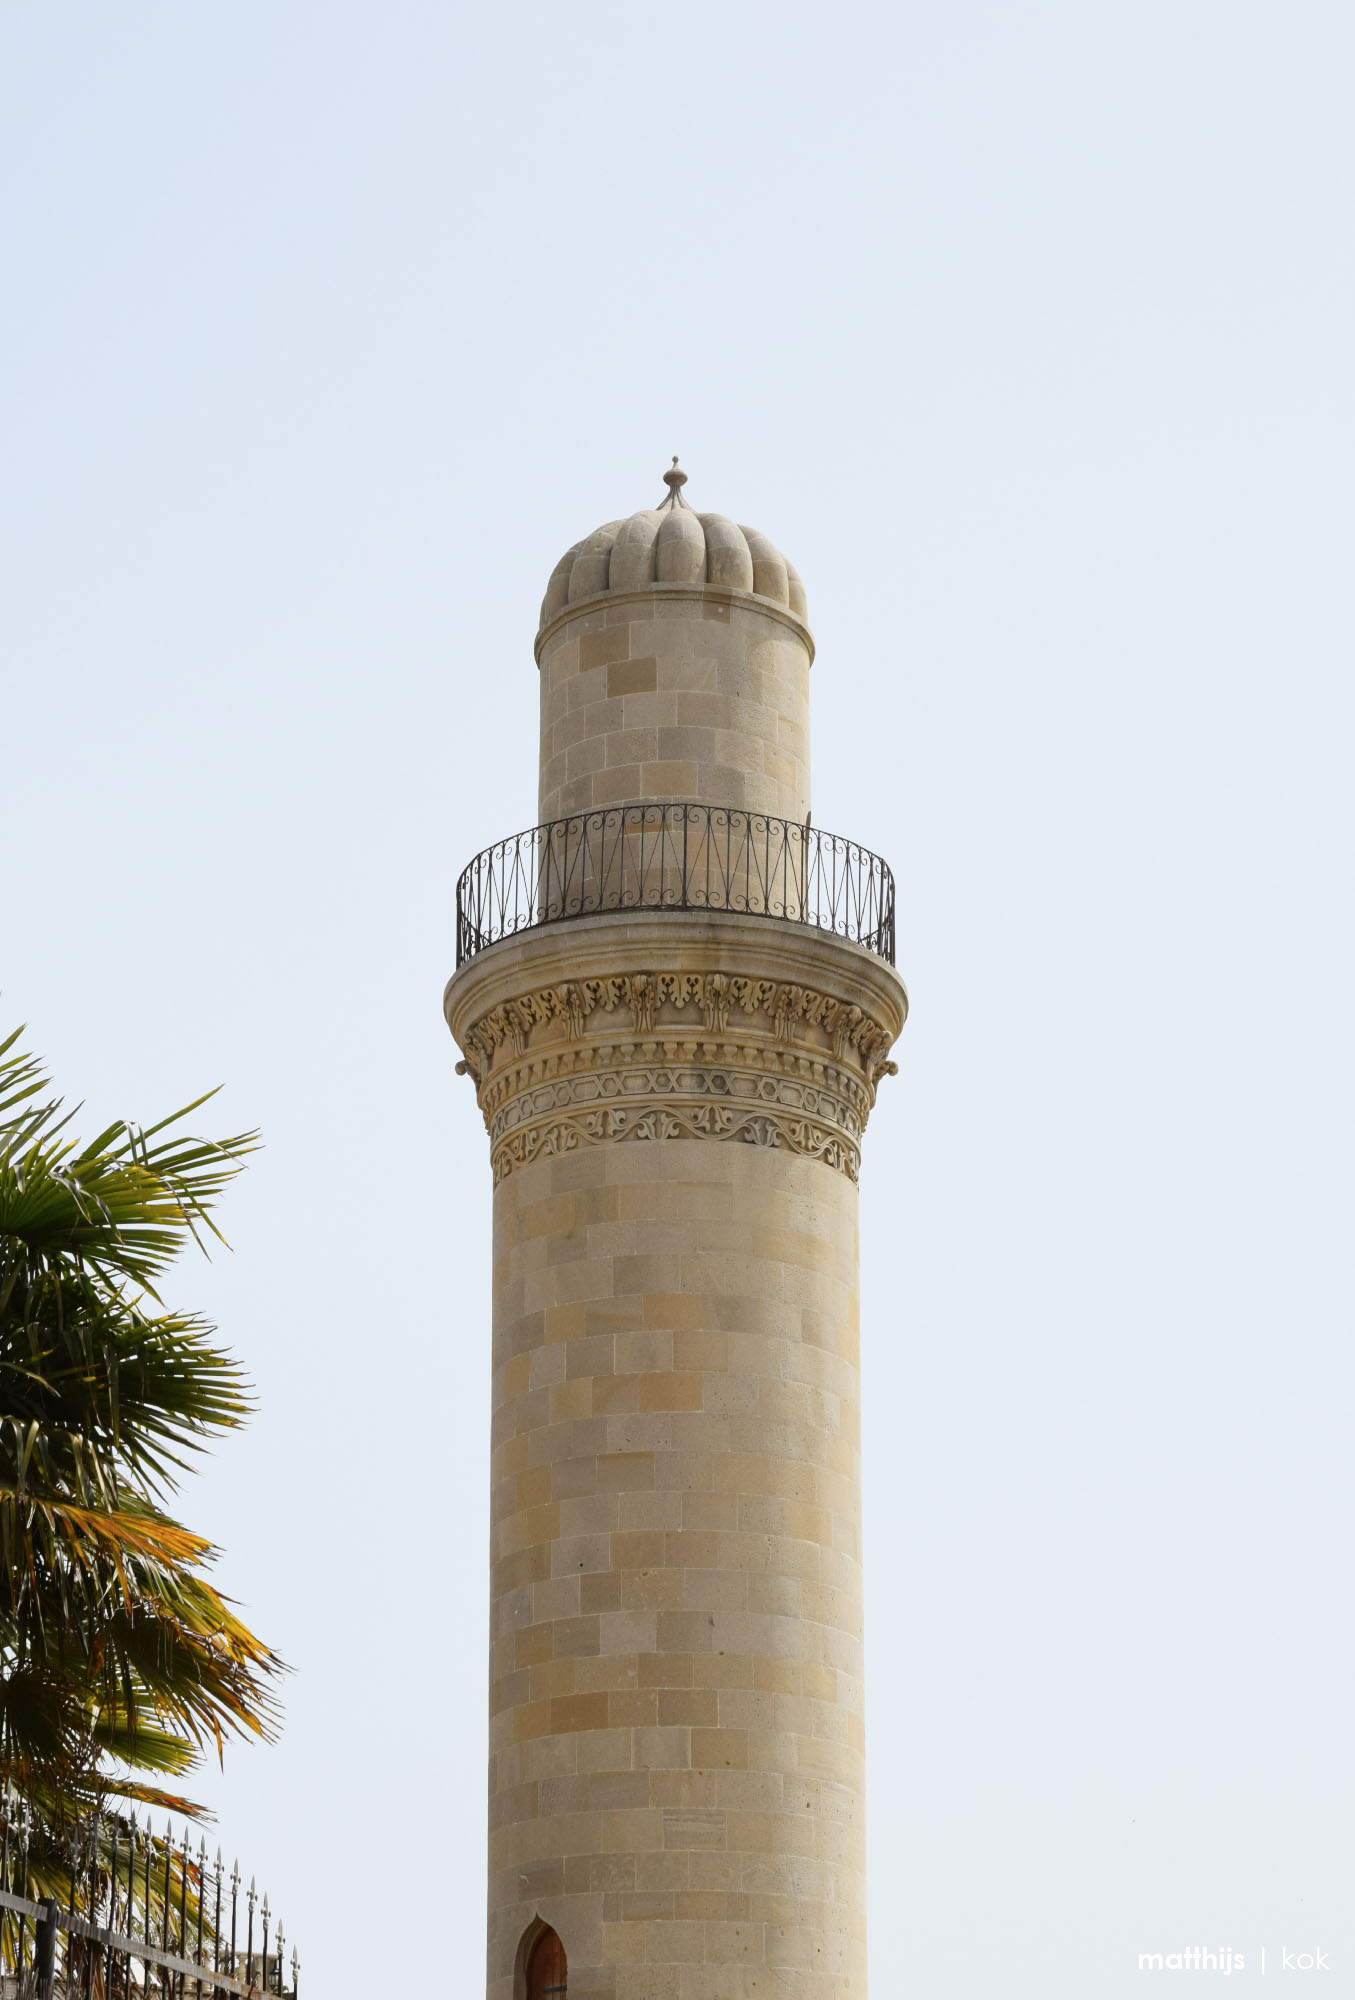 Juma Mosque, Baku, Azerbaijan | Photo by Matthijs Kok